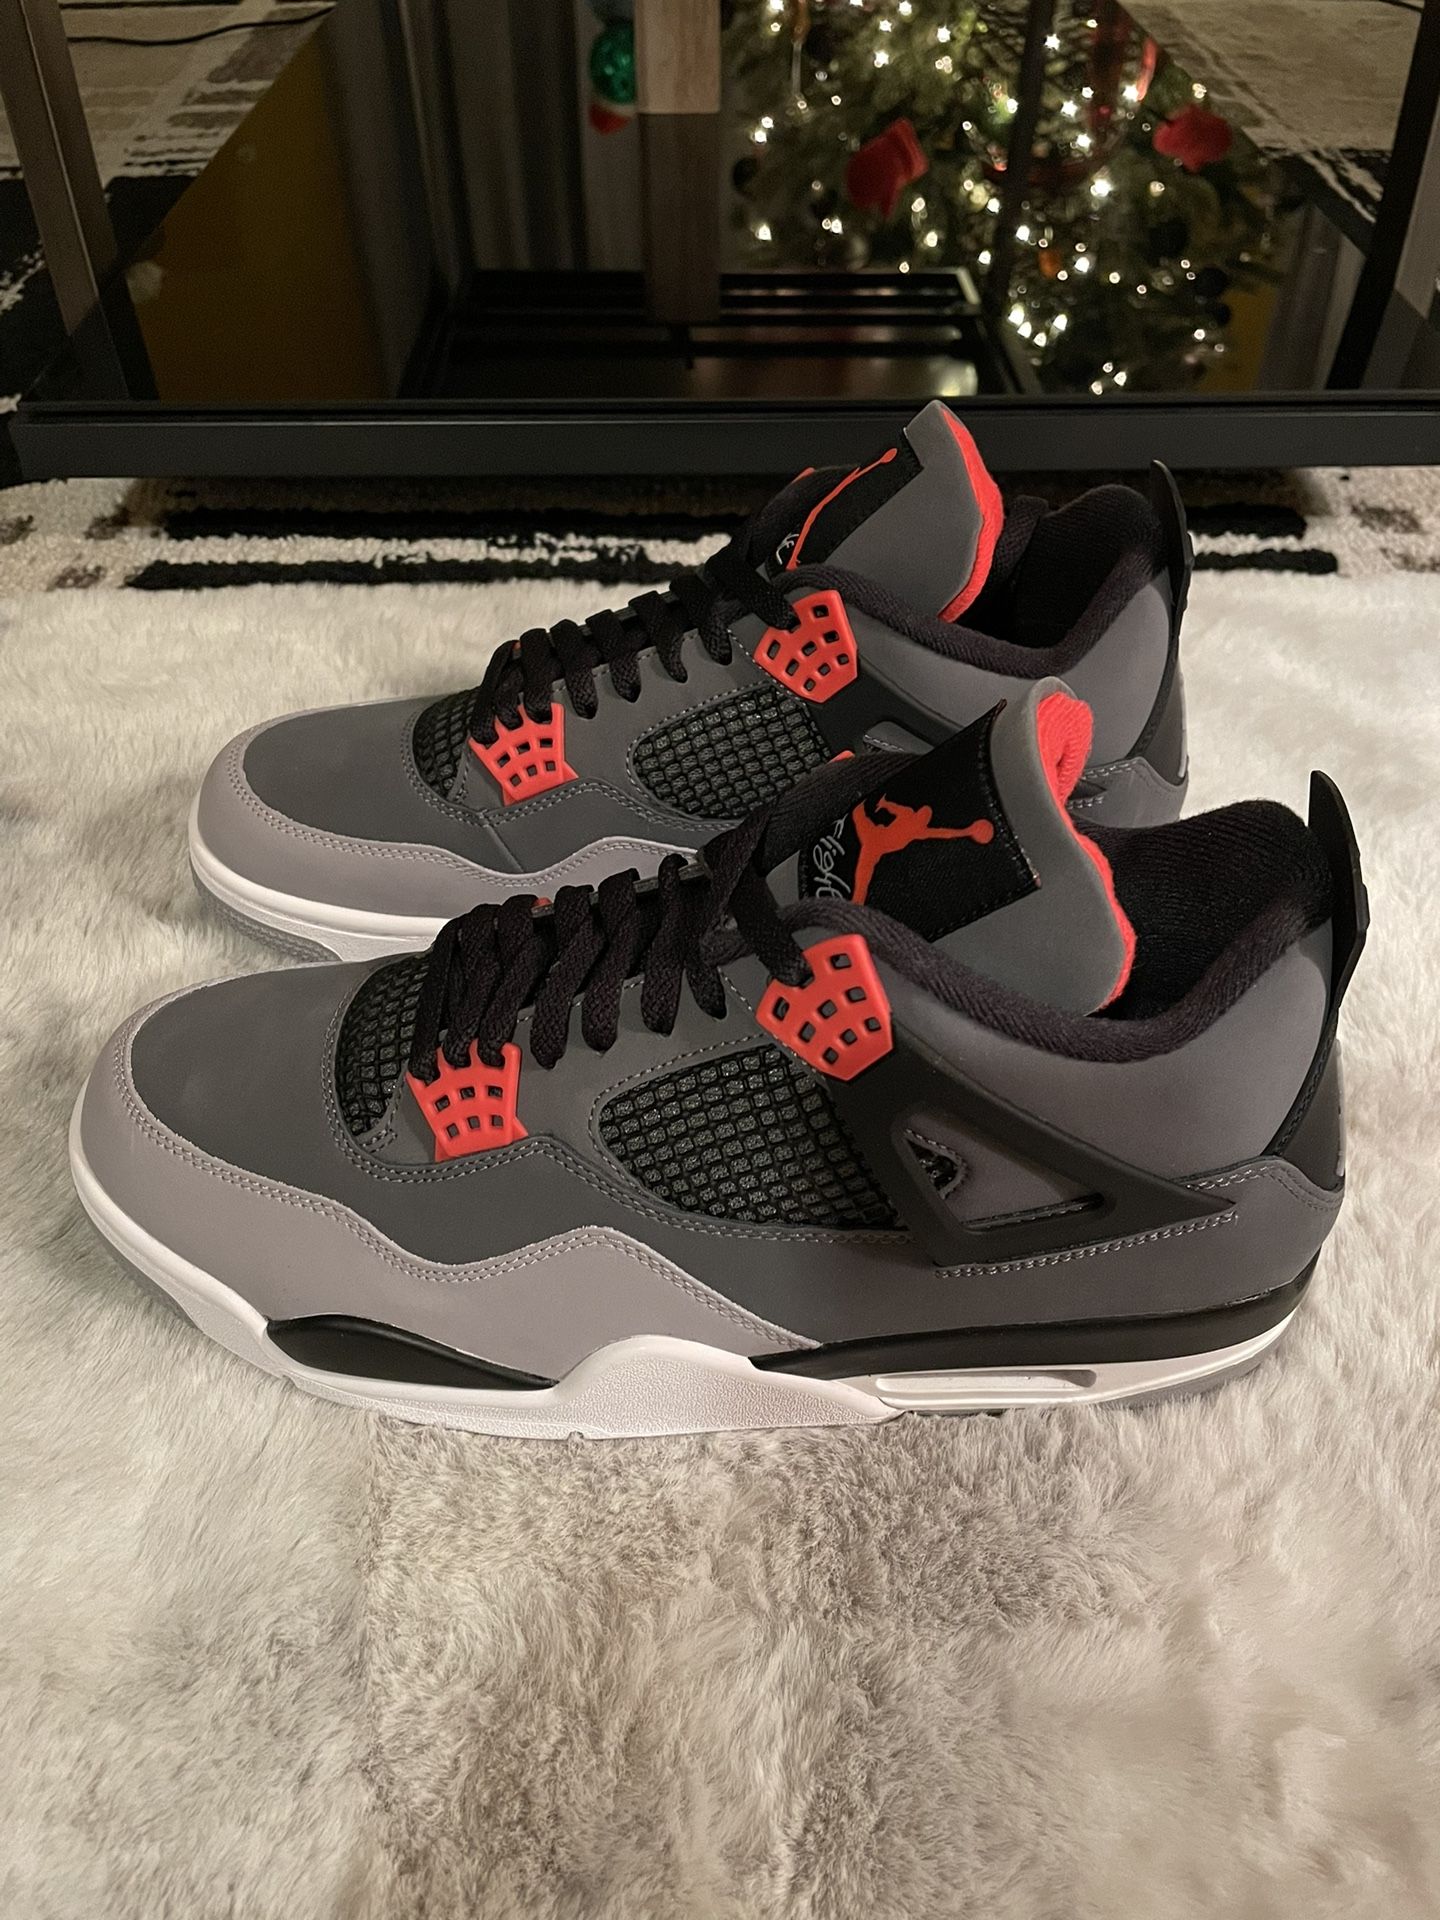 Jordan 4 Retro (Infrared)